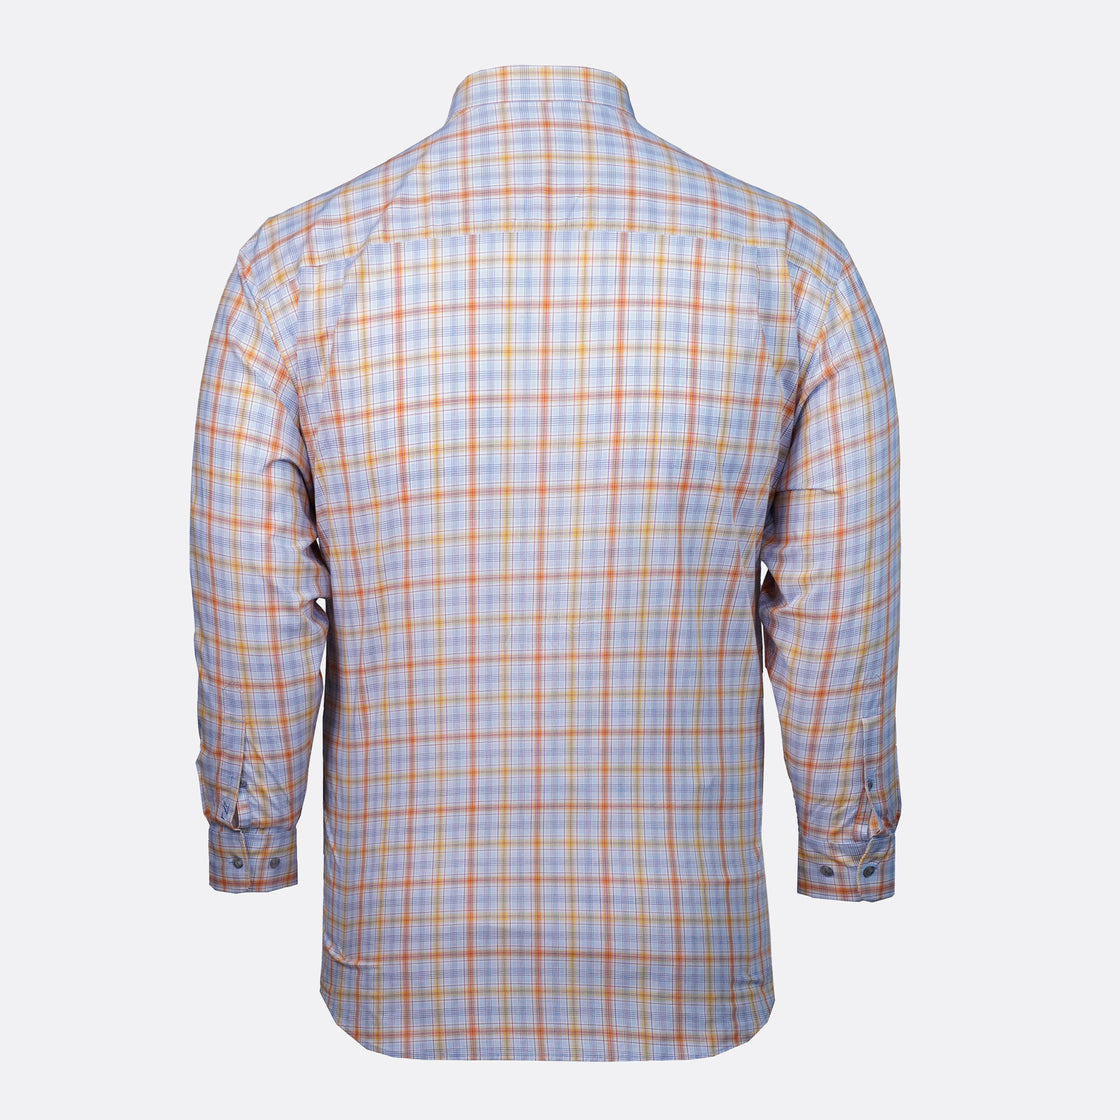 Cutter & Buck Multi Coloured Tartan Plaid Shirt